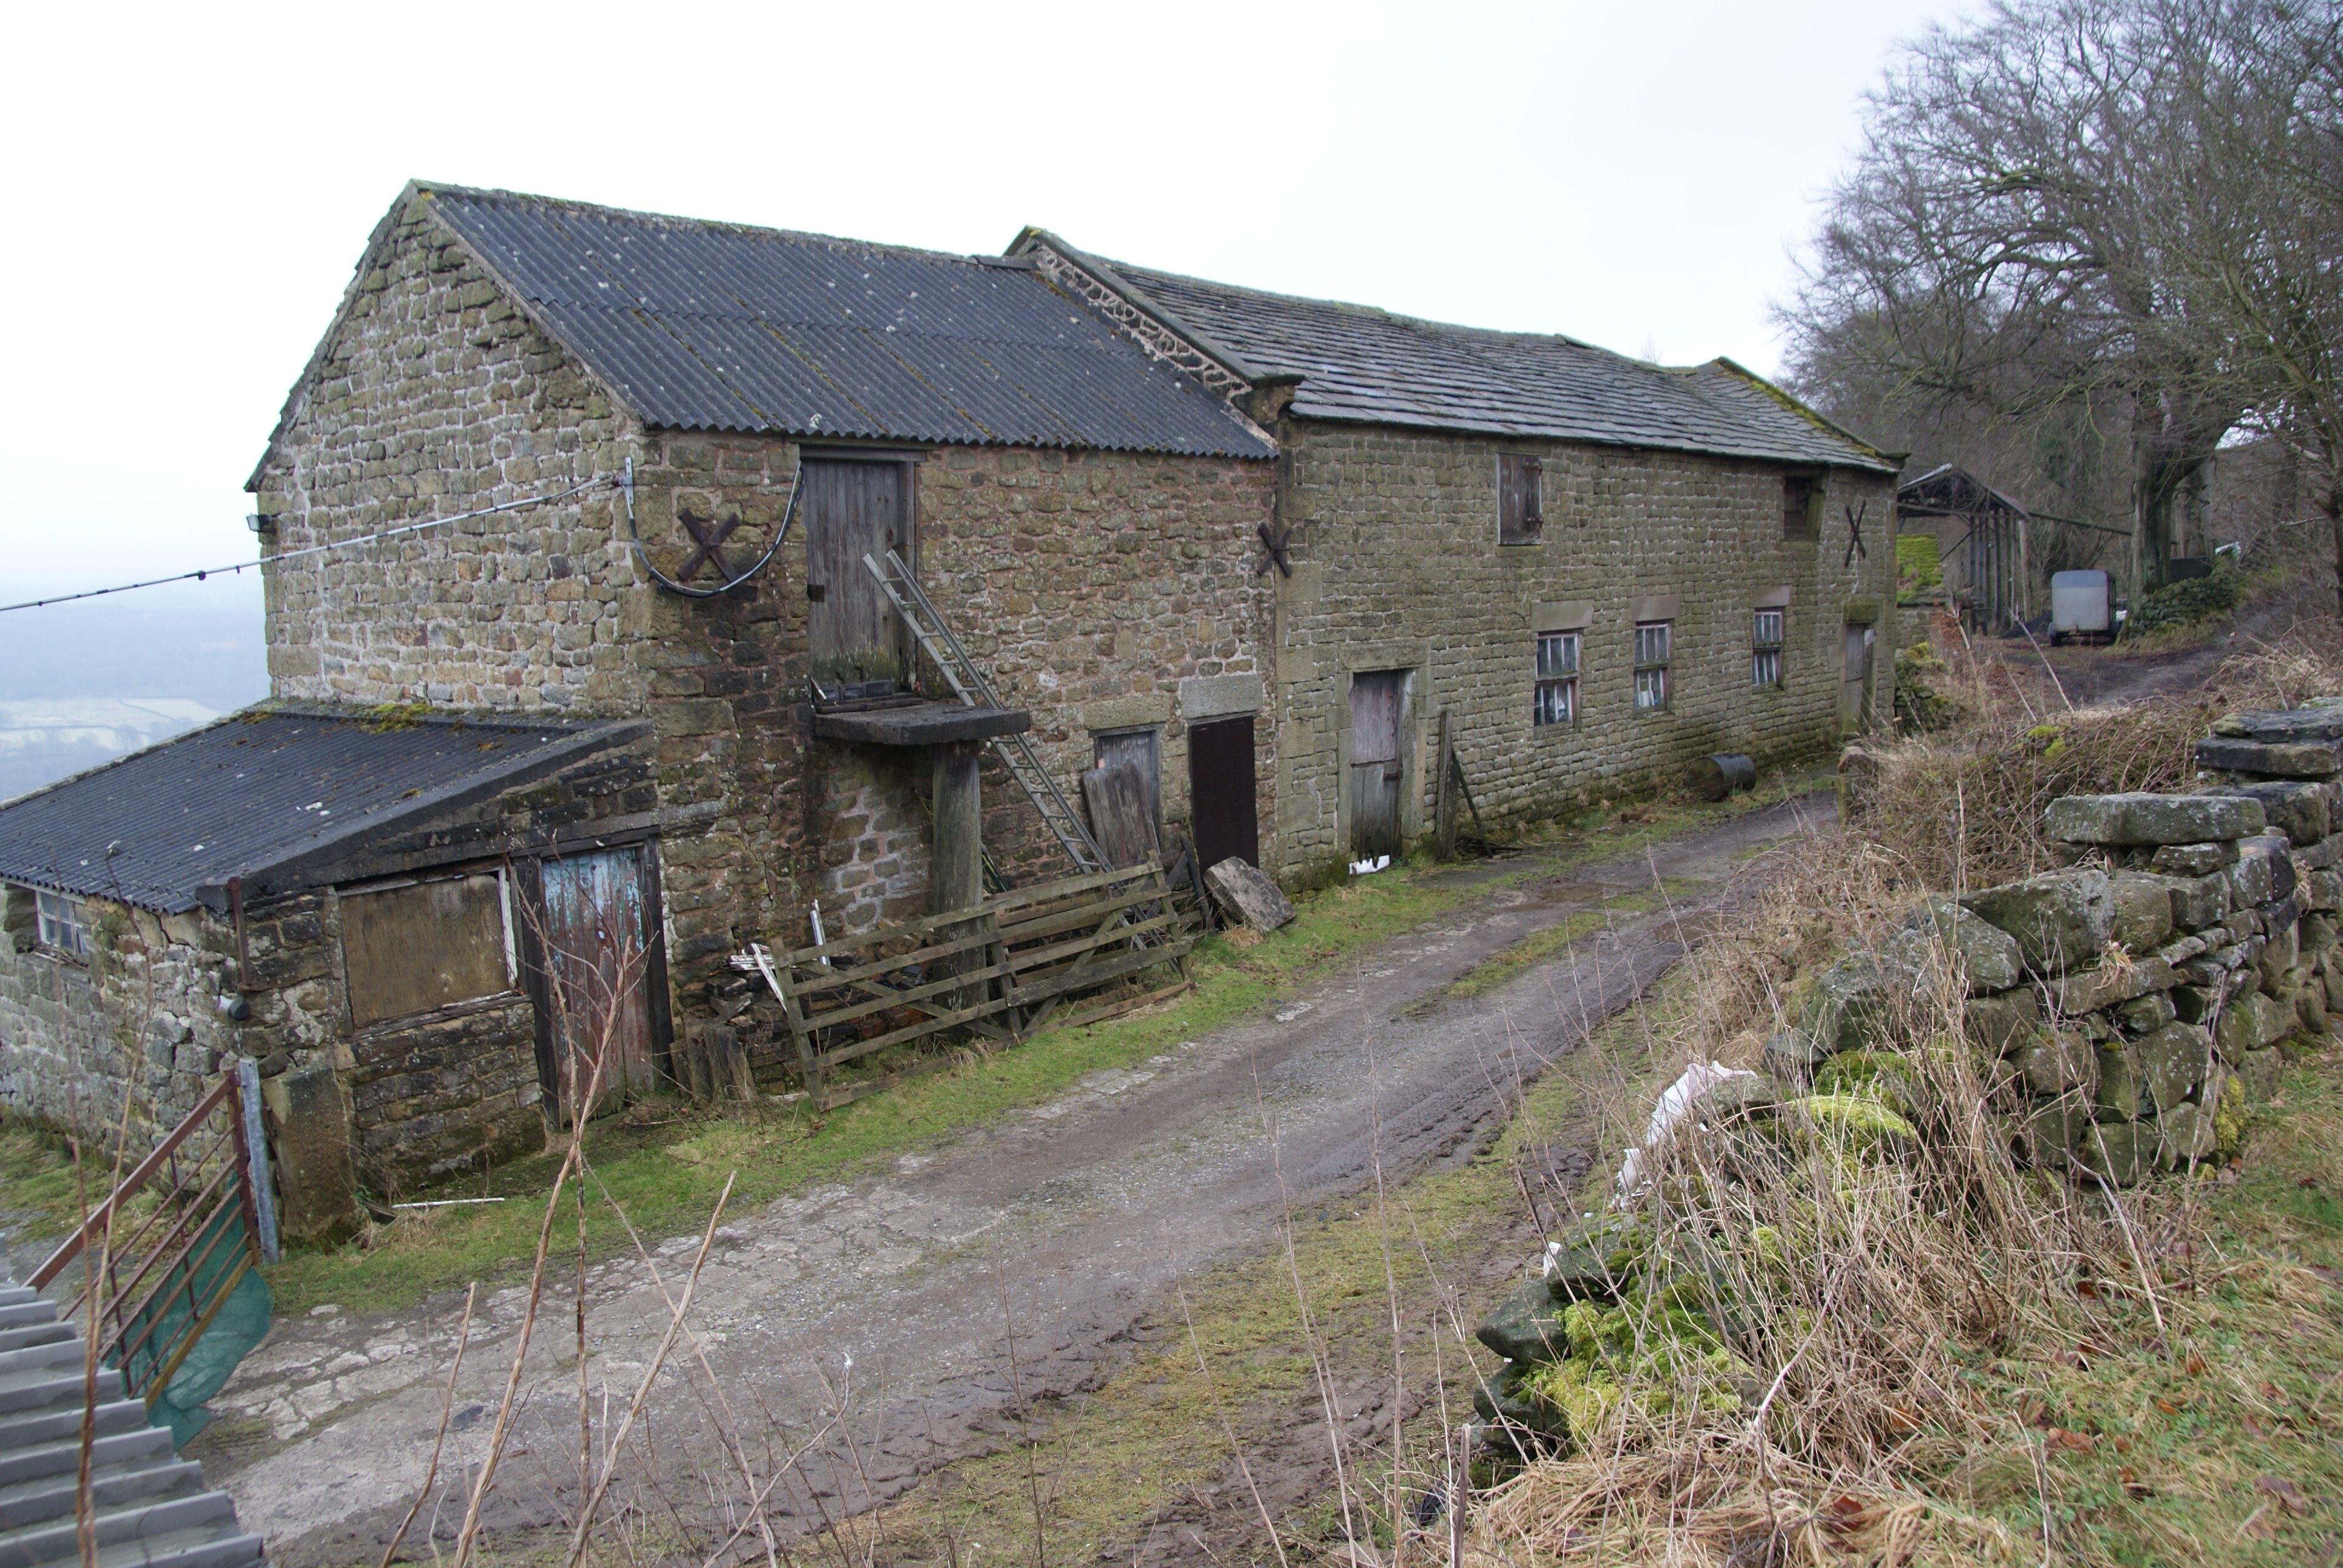 File:Old farm buildings - geograph.org.uk - 1729525.jpg - Wikimedia ...